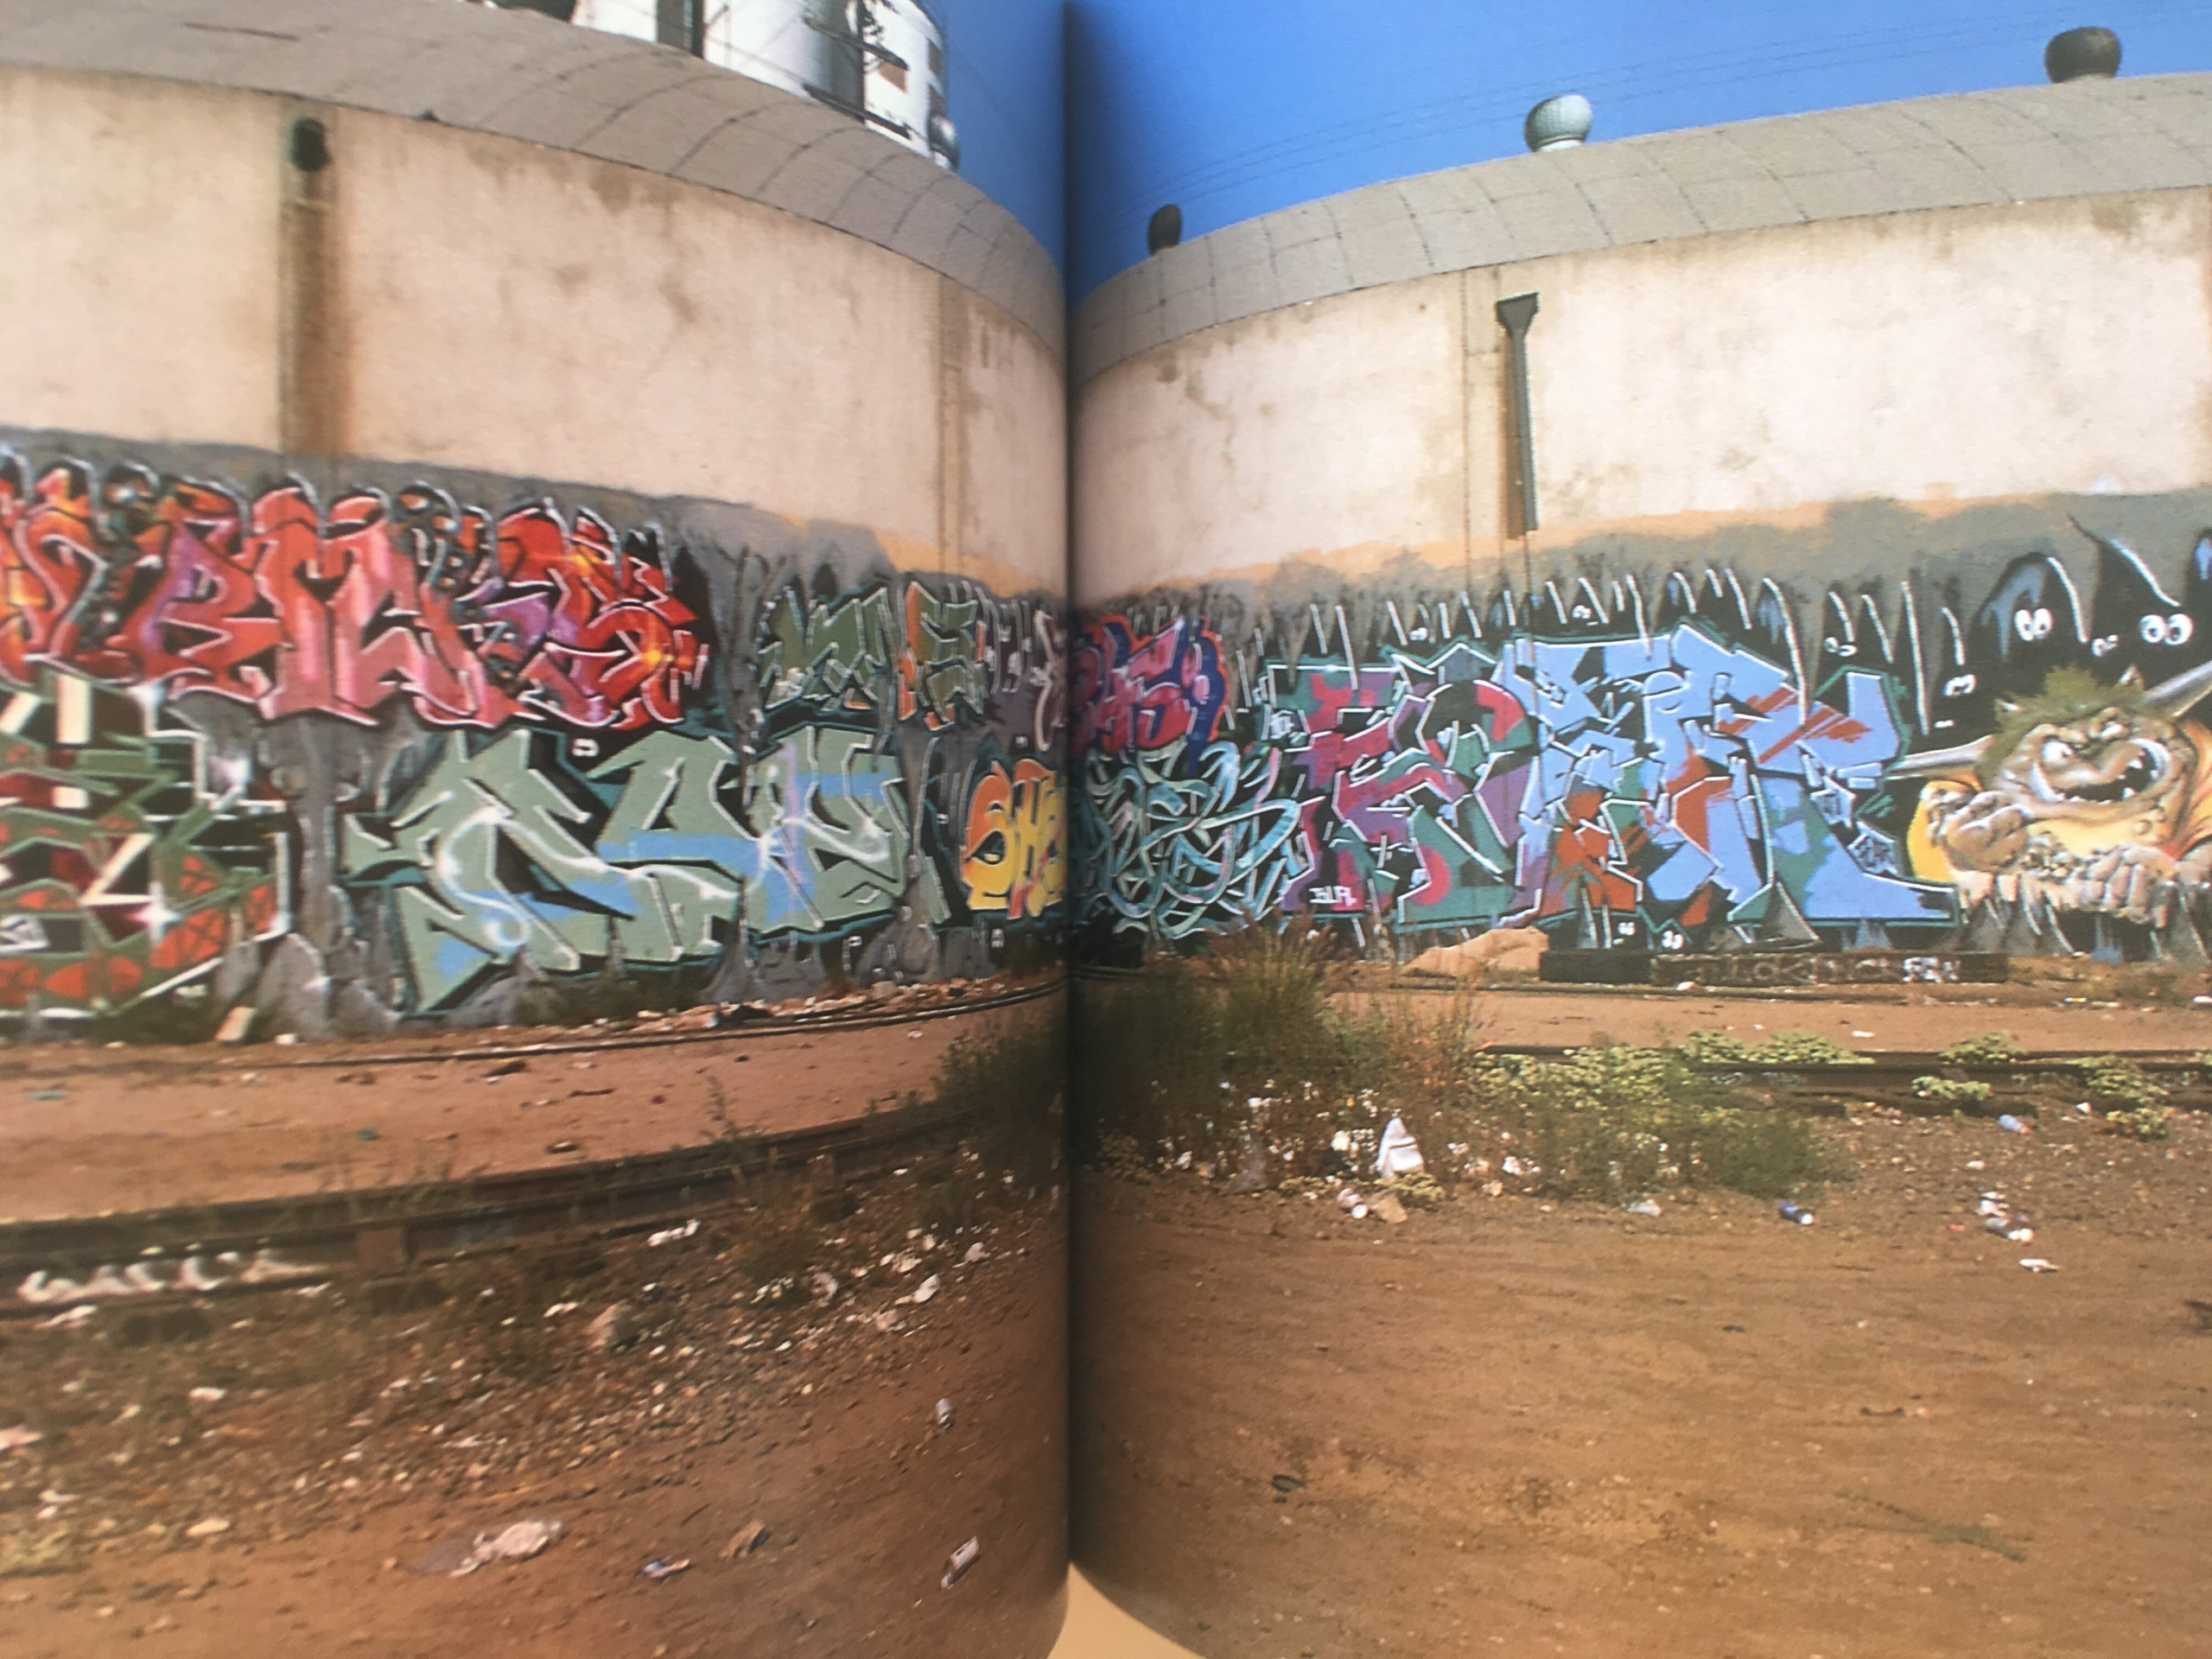 Graffiti LA: Street Styles and Art (with cd-rom)